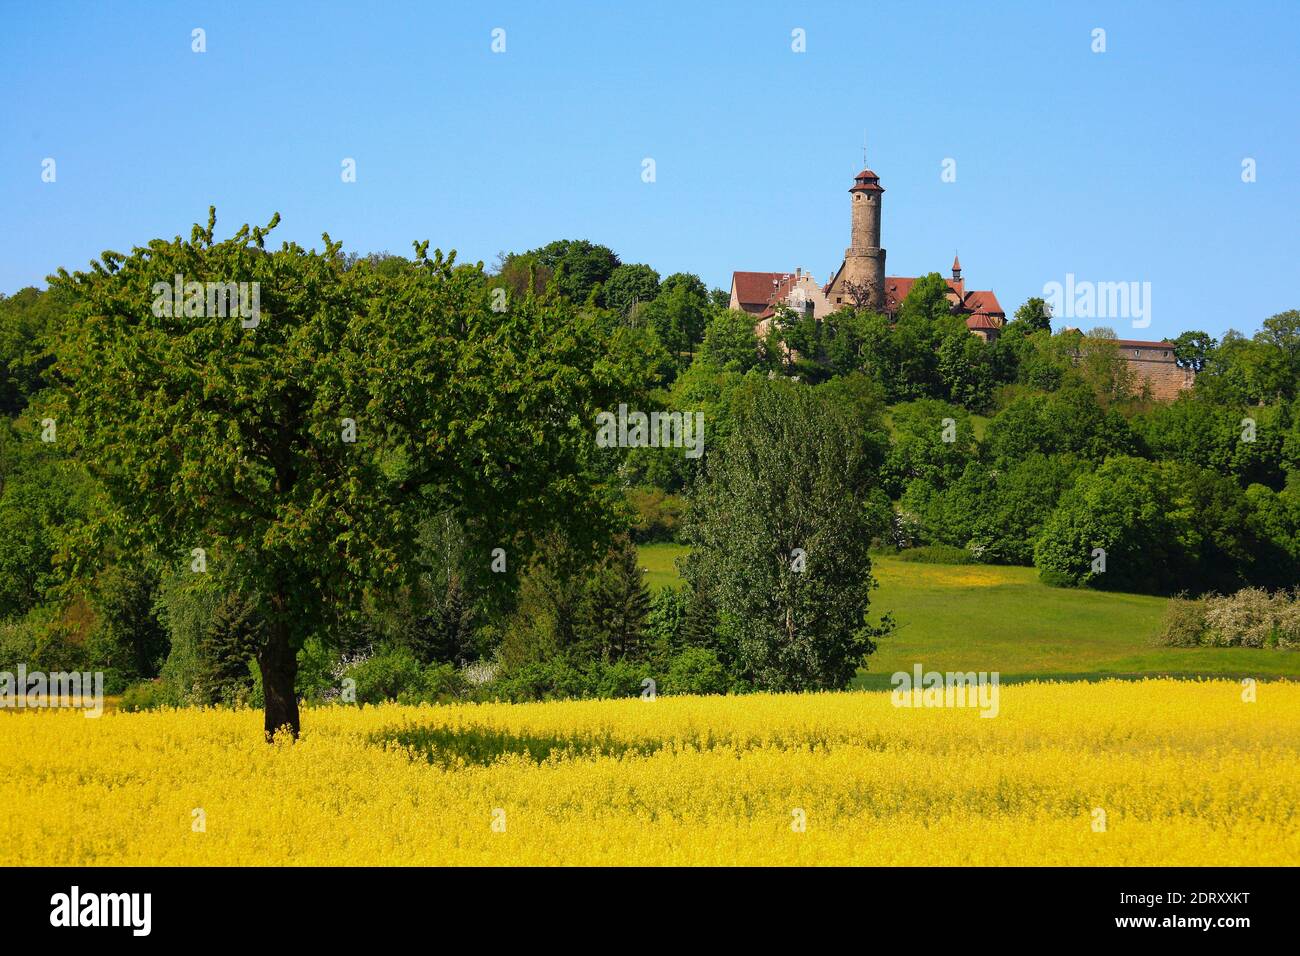 Altenburg, medieval hilltop castle, city of Bamberg, Upper Franconia, Bavaria, Germany  /  Altenburg, mittelalterliche Höhenburg, Stadt Bamberg, Oberf Stock Photo